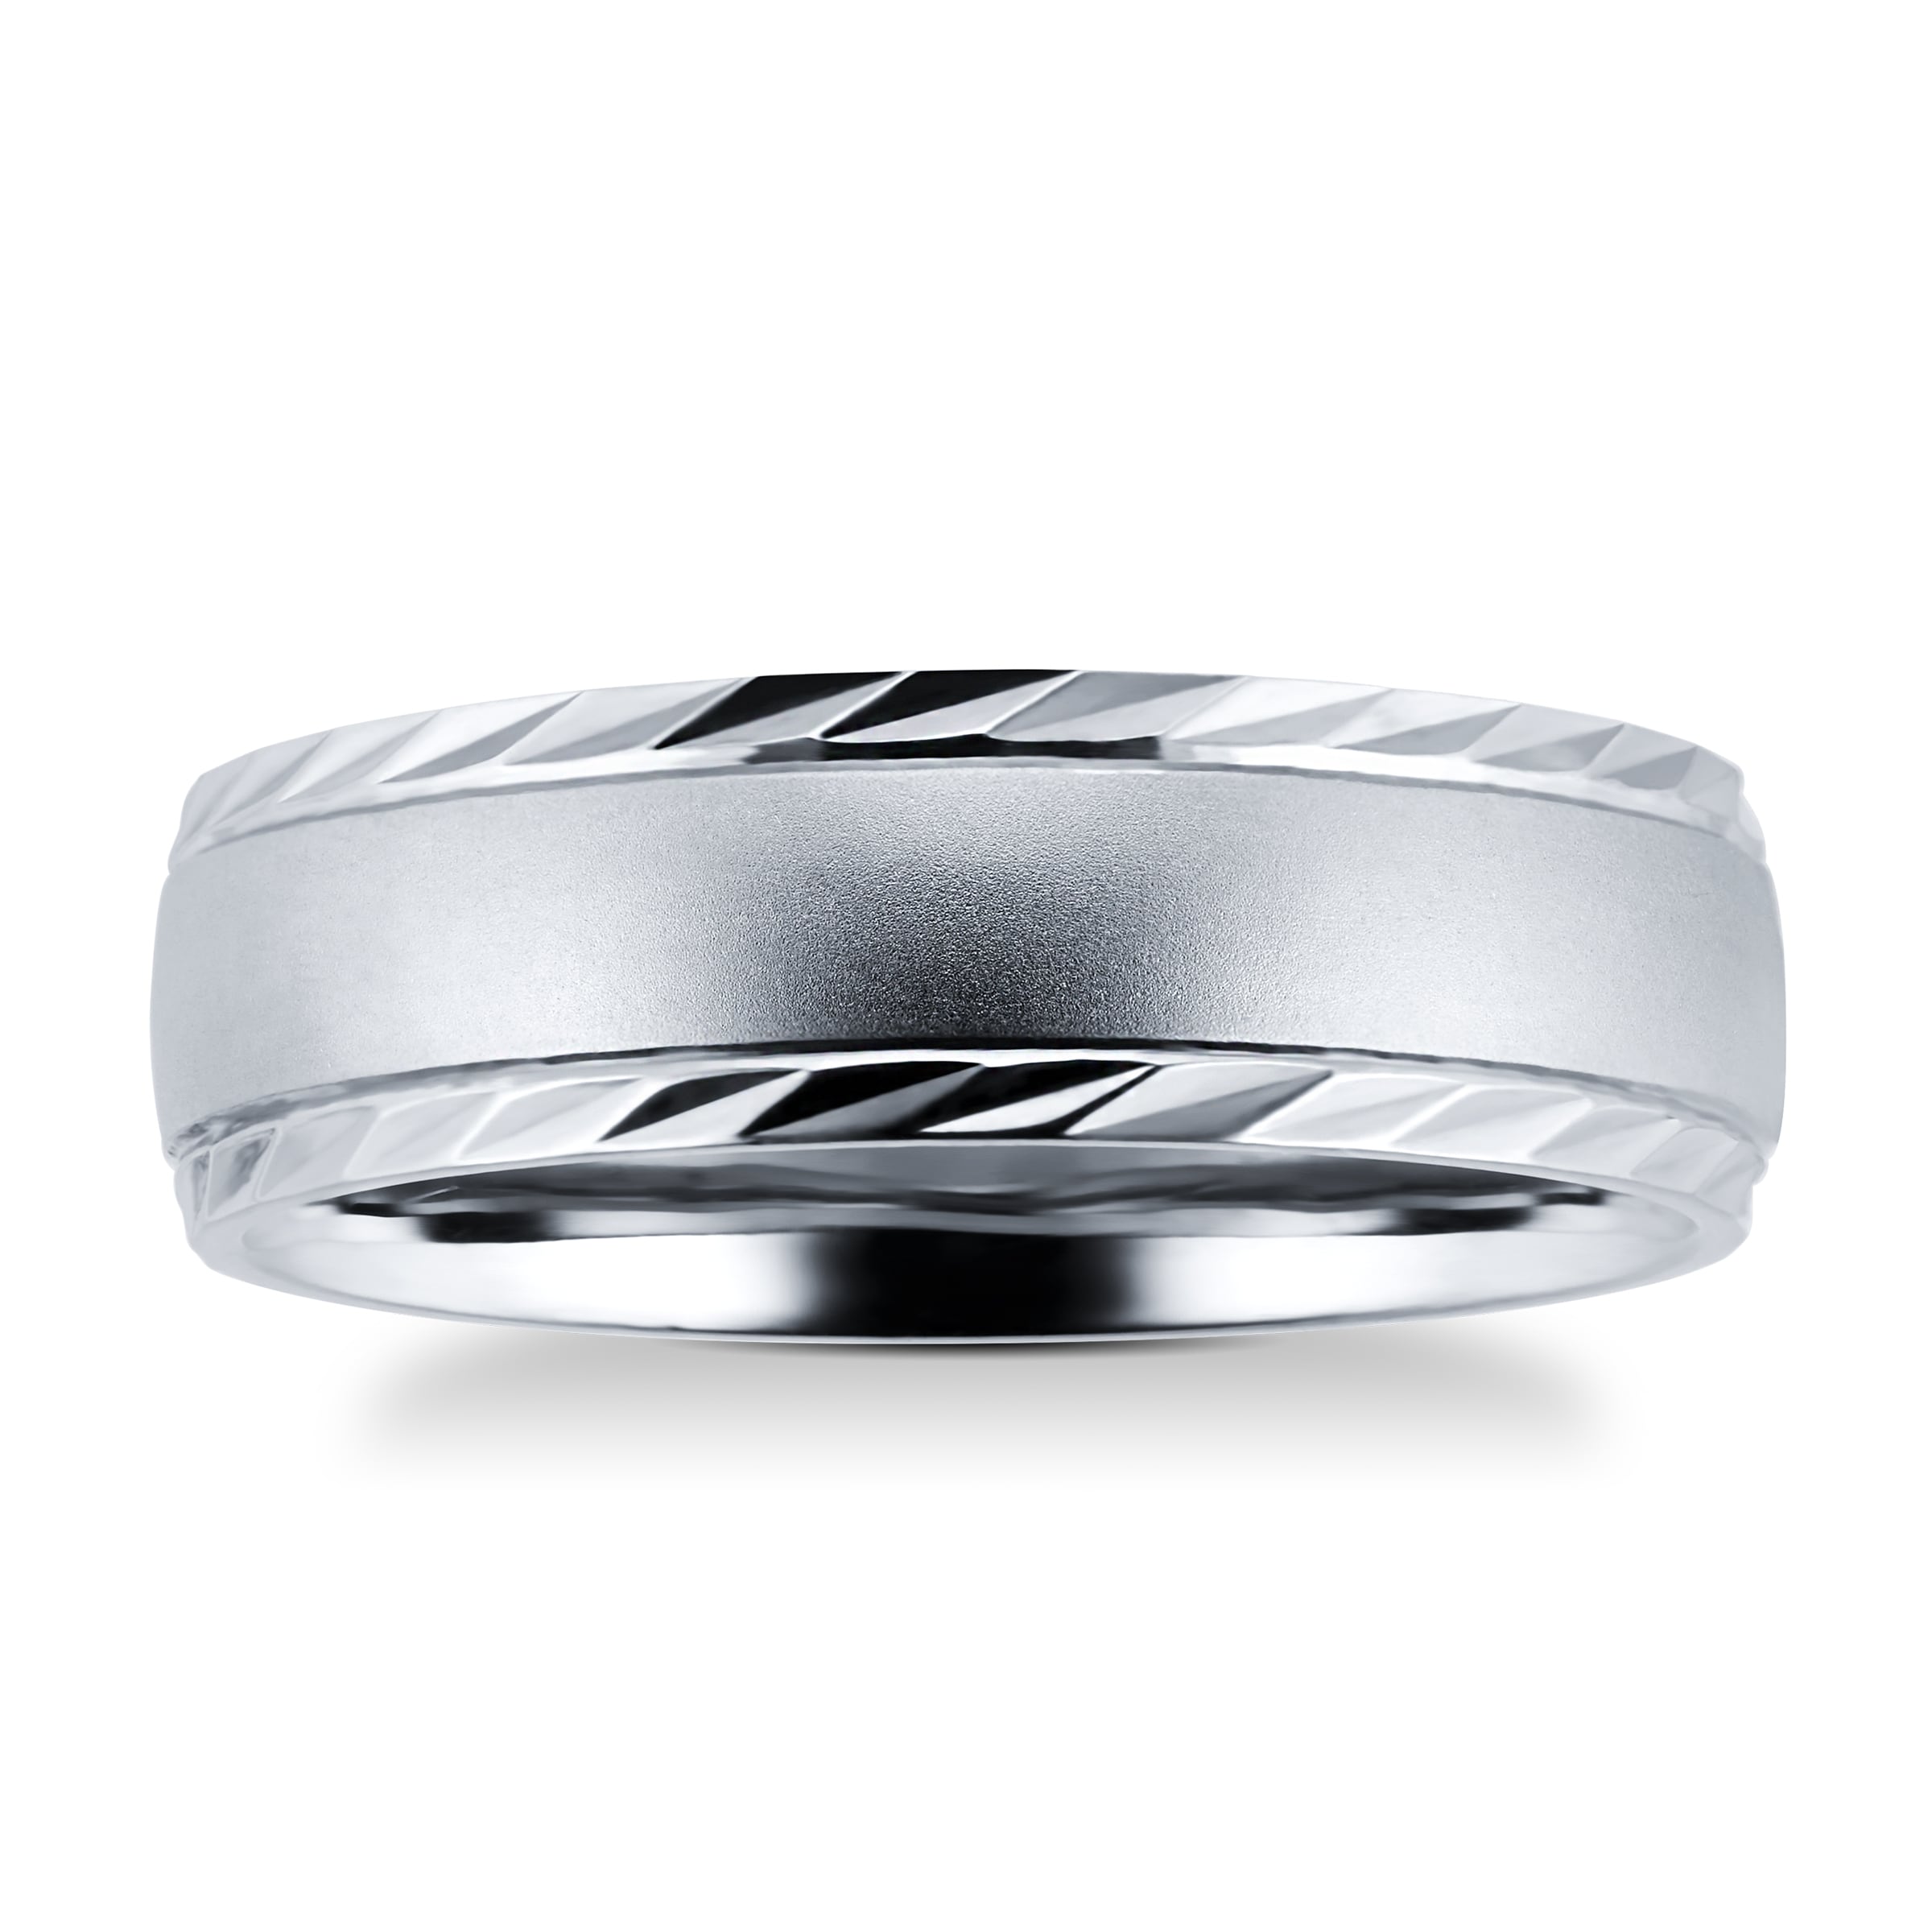 Palladium 500 6mm Fancy Gents Ring - Ring Size R